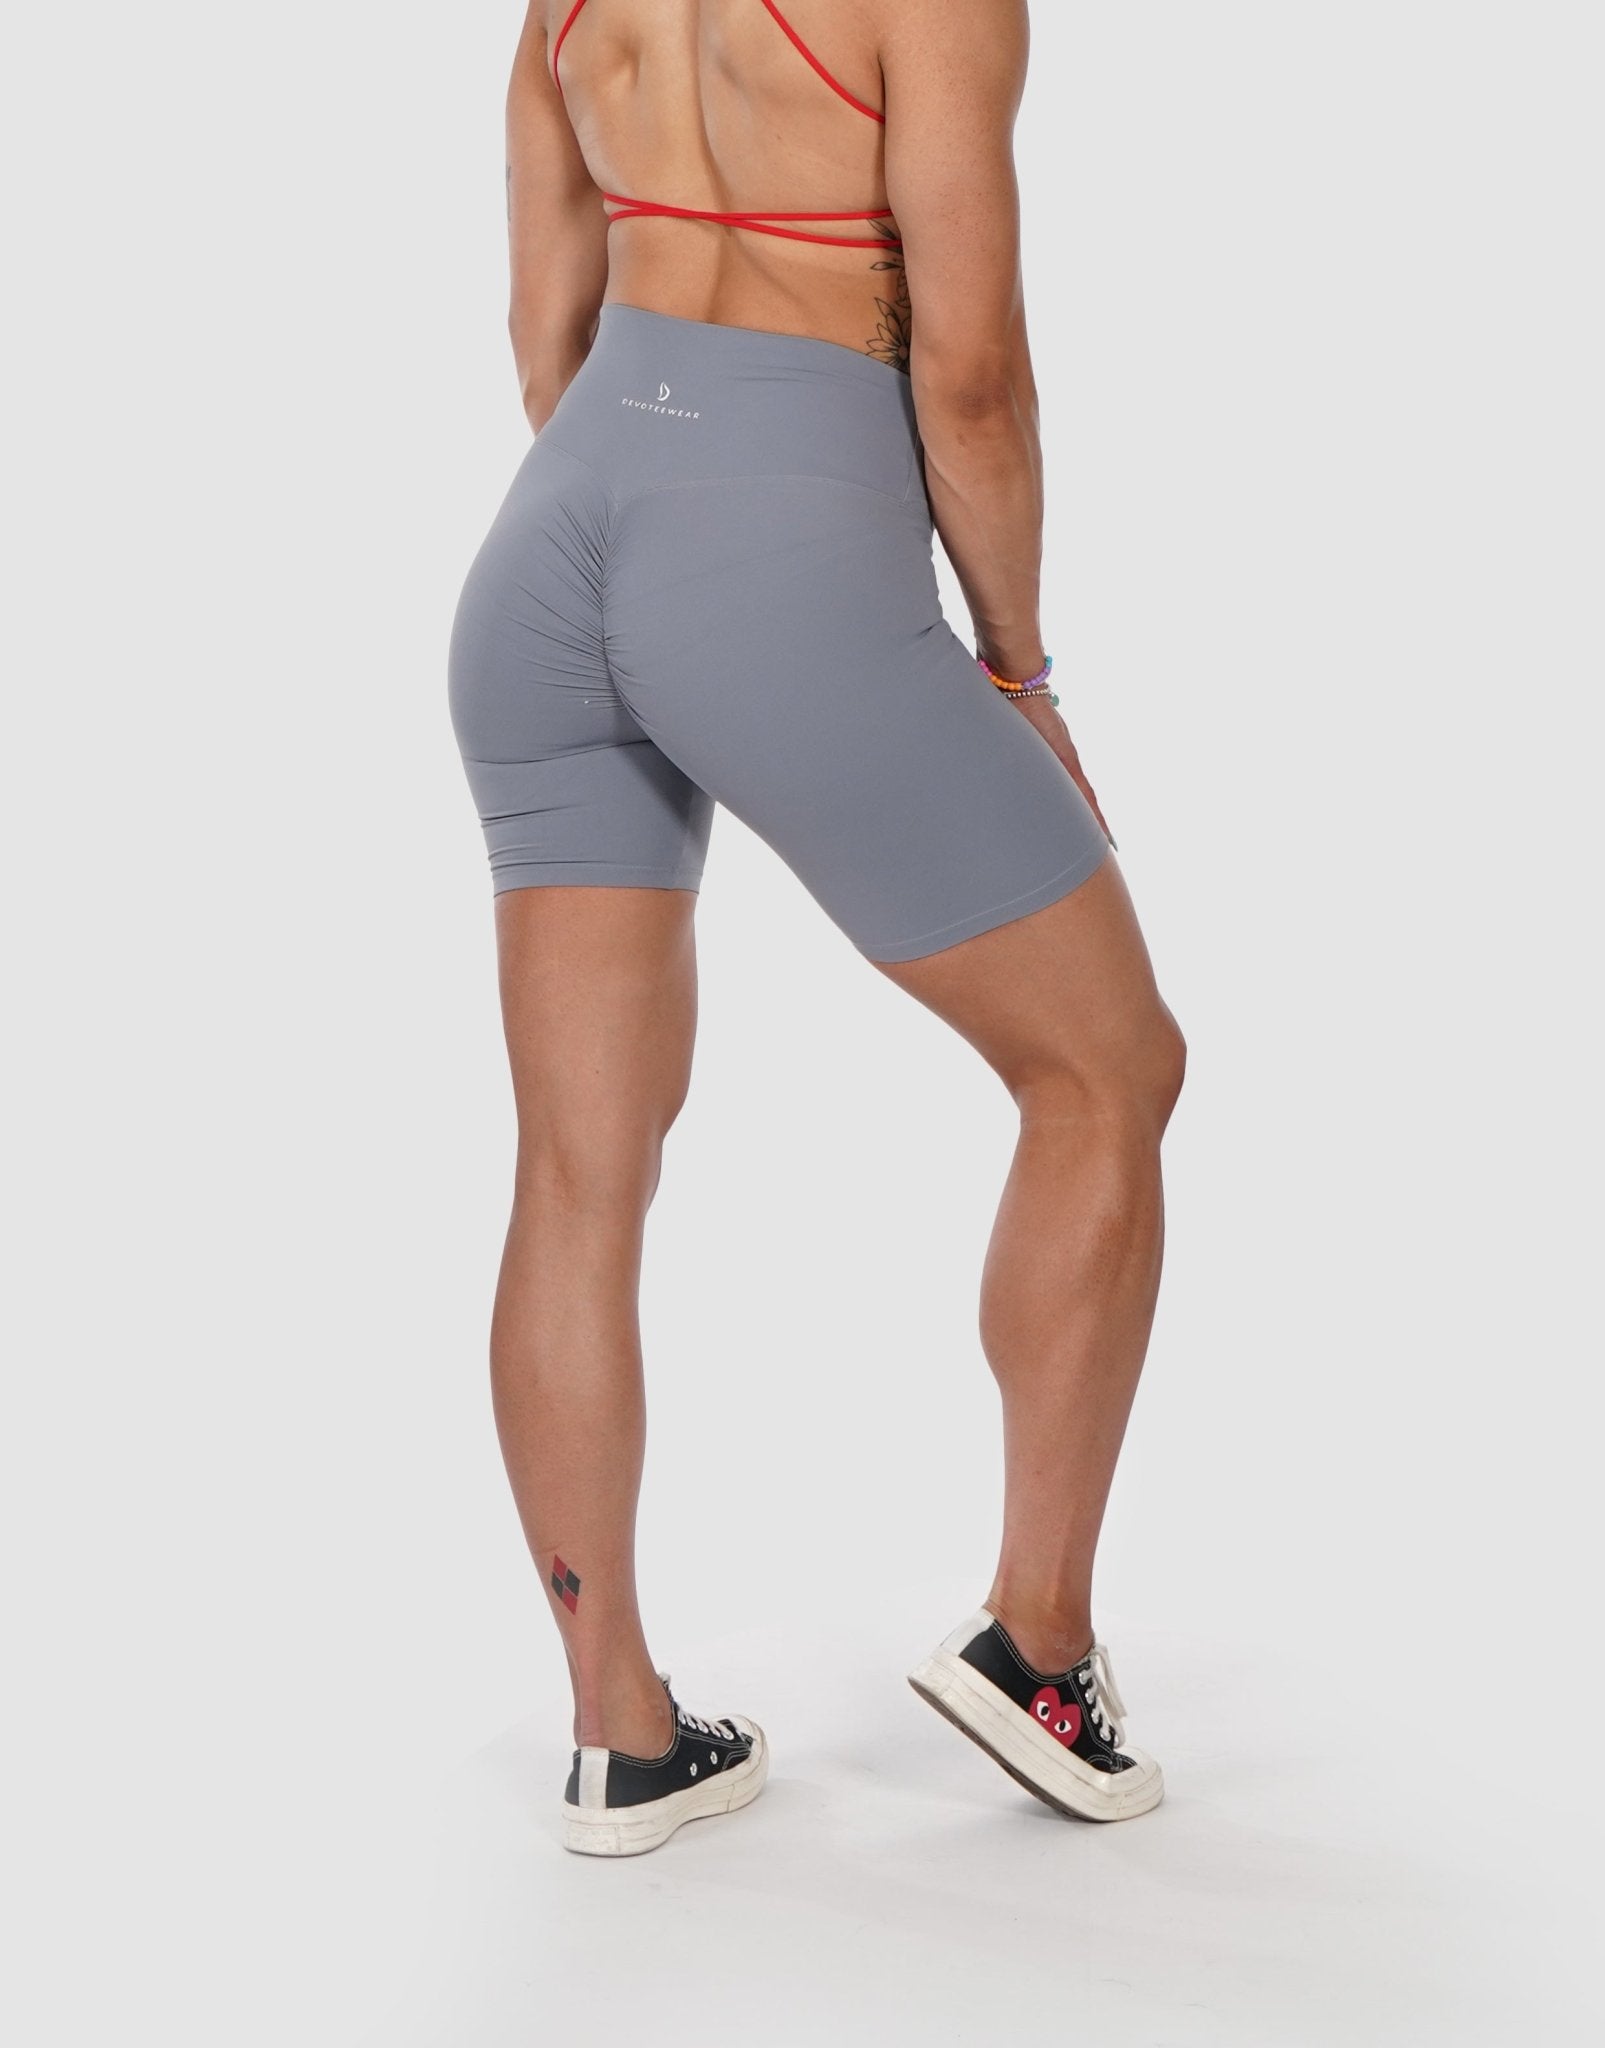 SYROKAN Women's Butterluxe Bermuda Long Shorts 9'' - Athletic High Waisted  Workout Running Comfy Yoga Shorts Deep Pockets